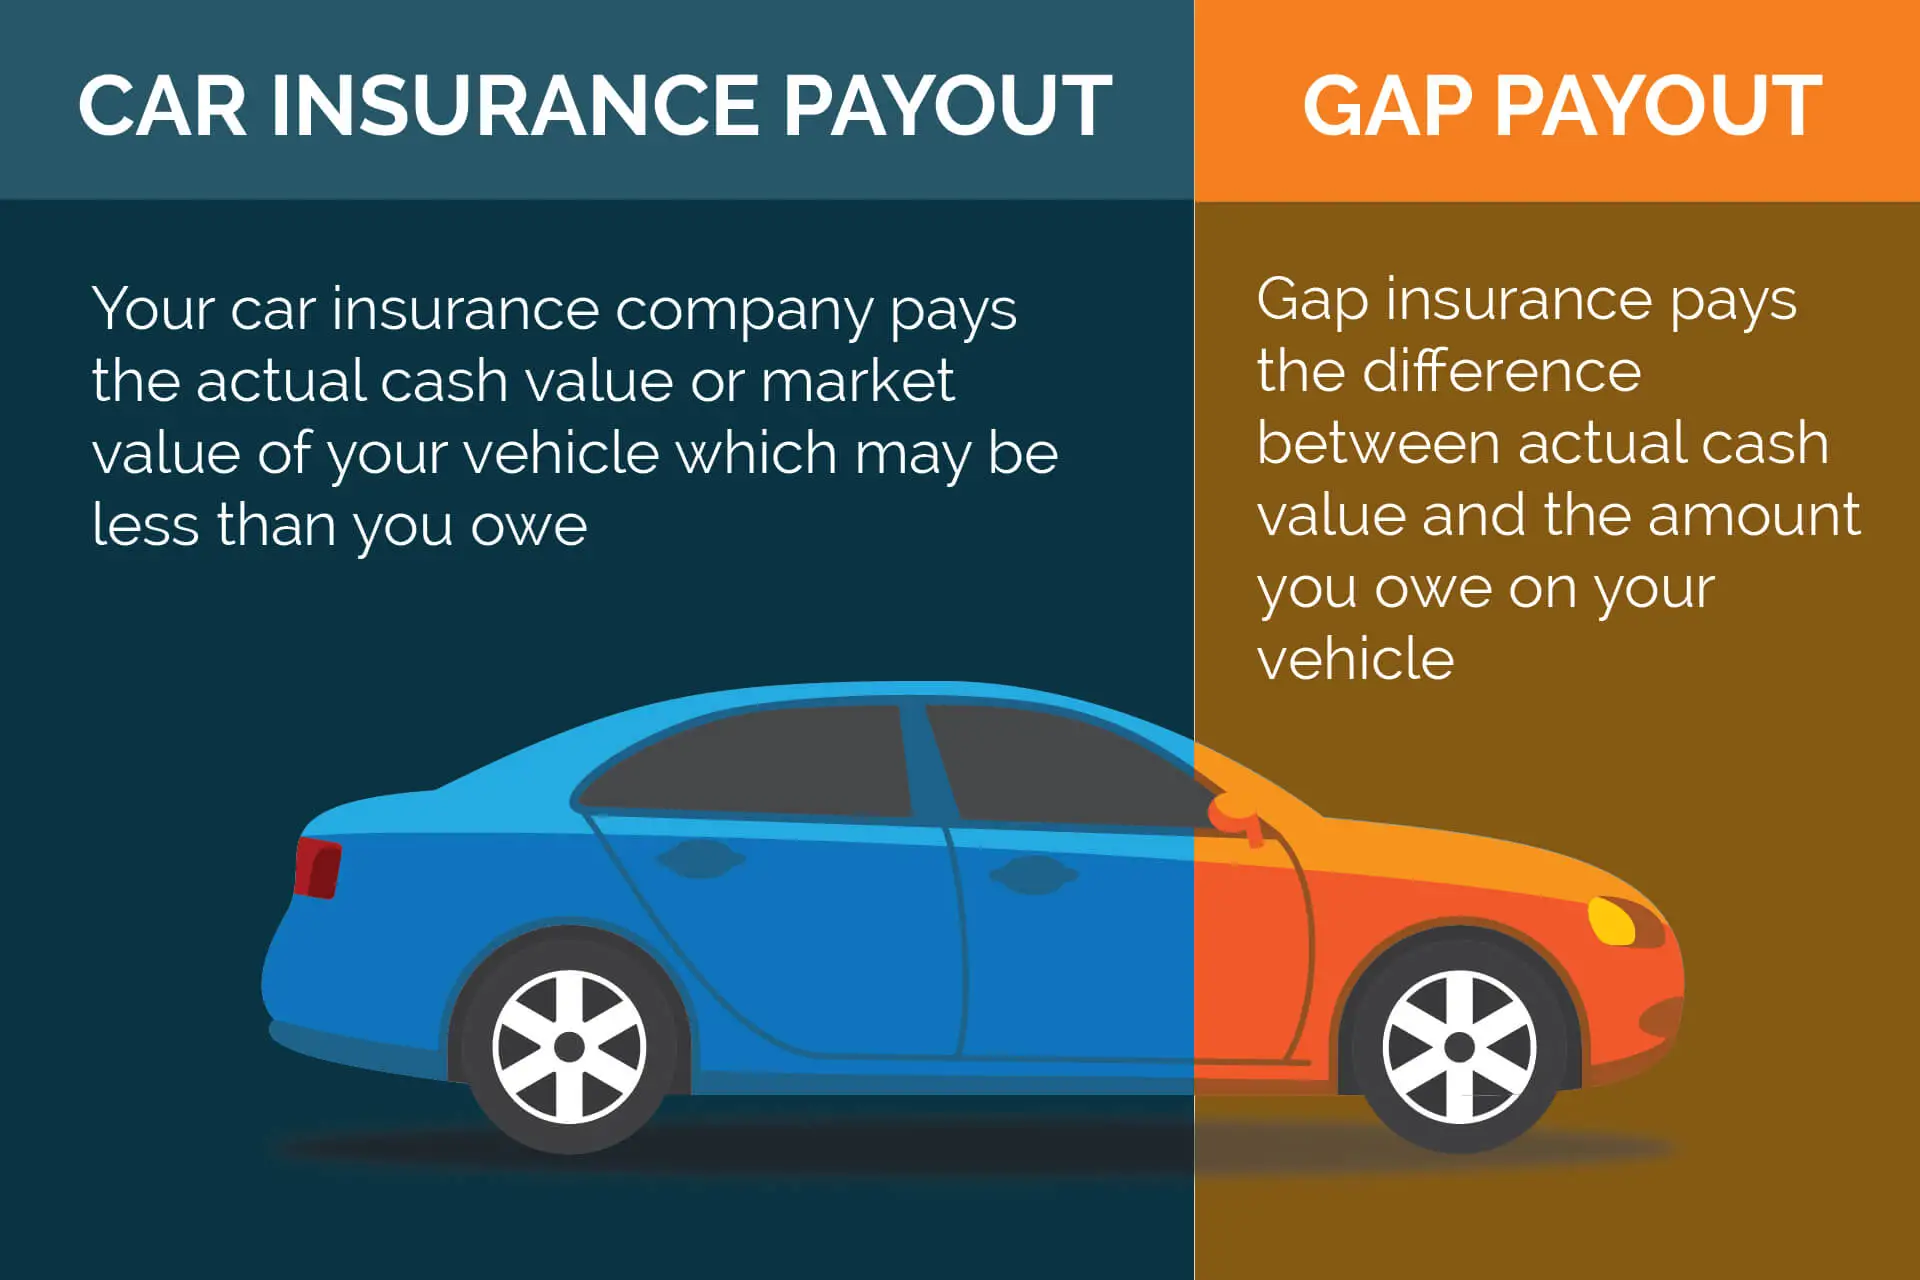 Gap insurance illustration free image download